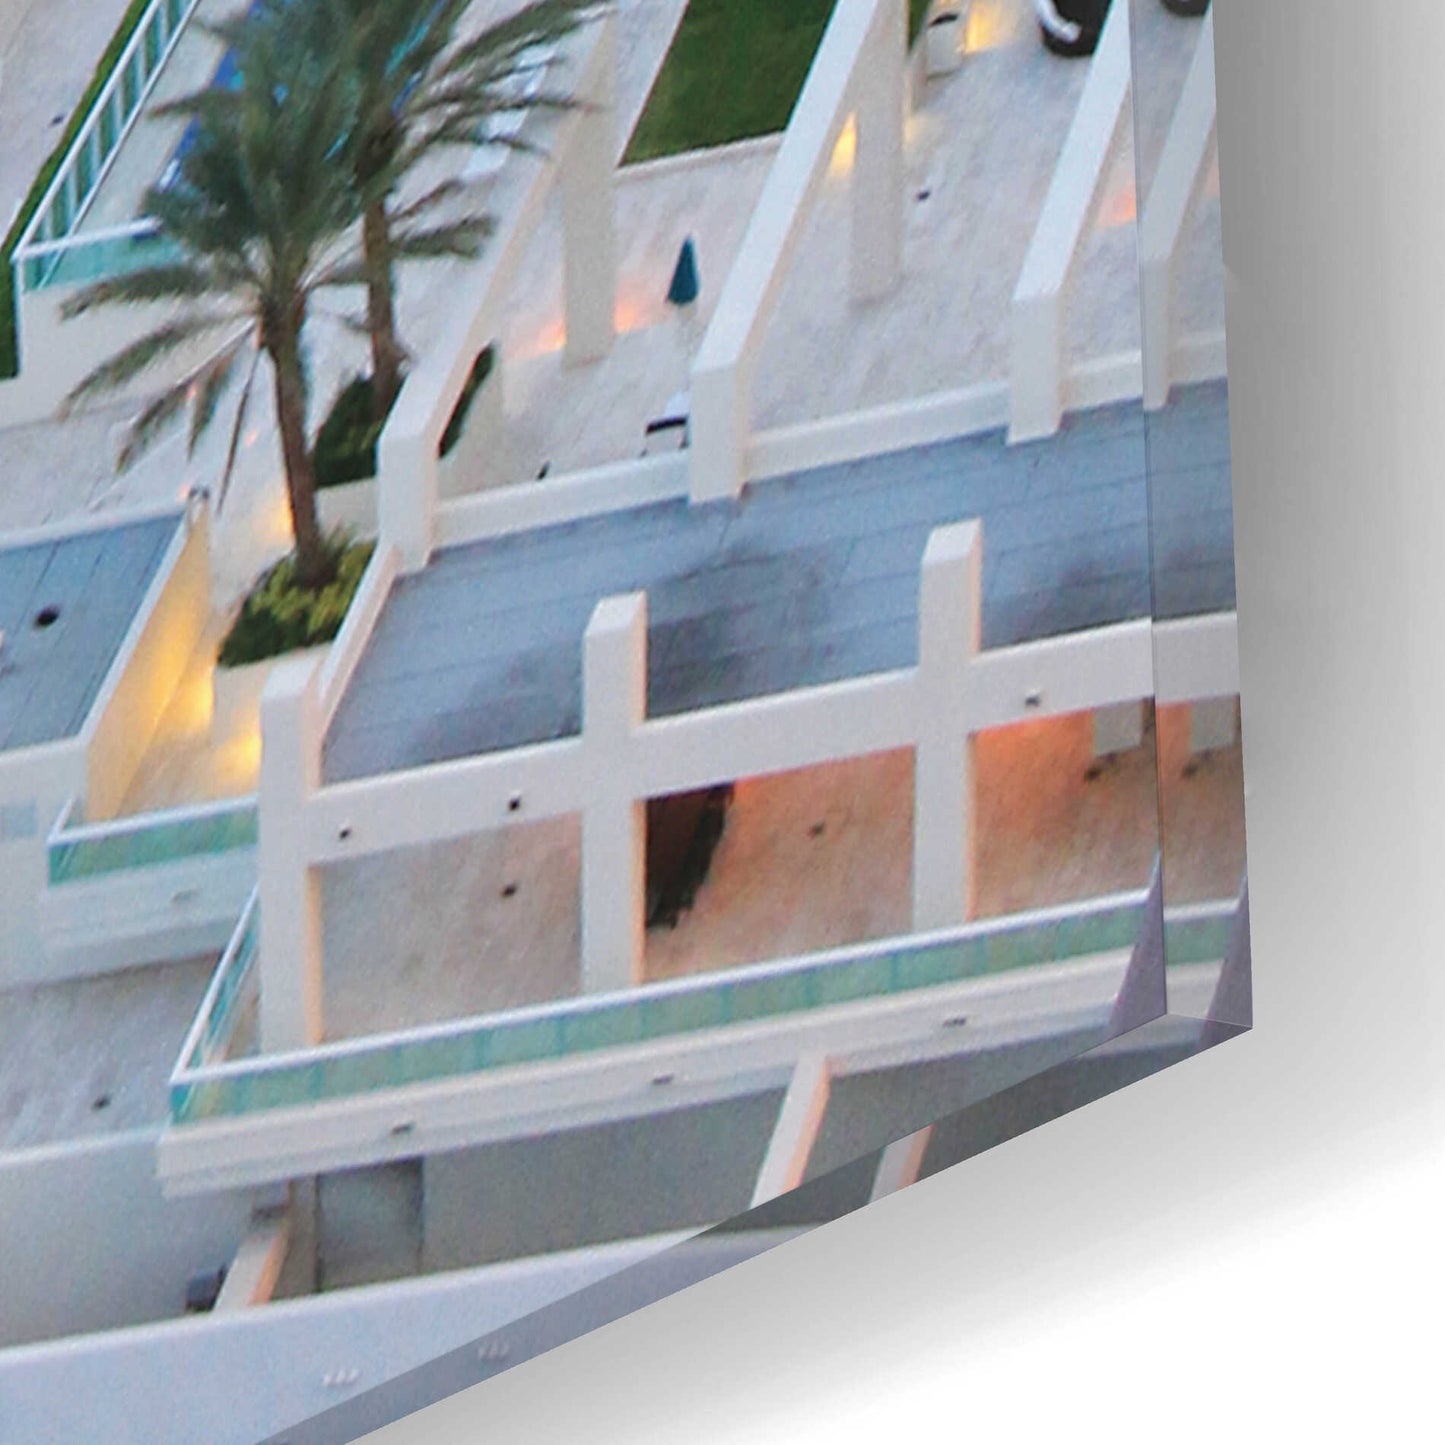 Epic Art 'Fort Lauderdale Beach' by Lori Deiter, Acrylic Glass Wall Art,12x16